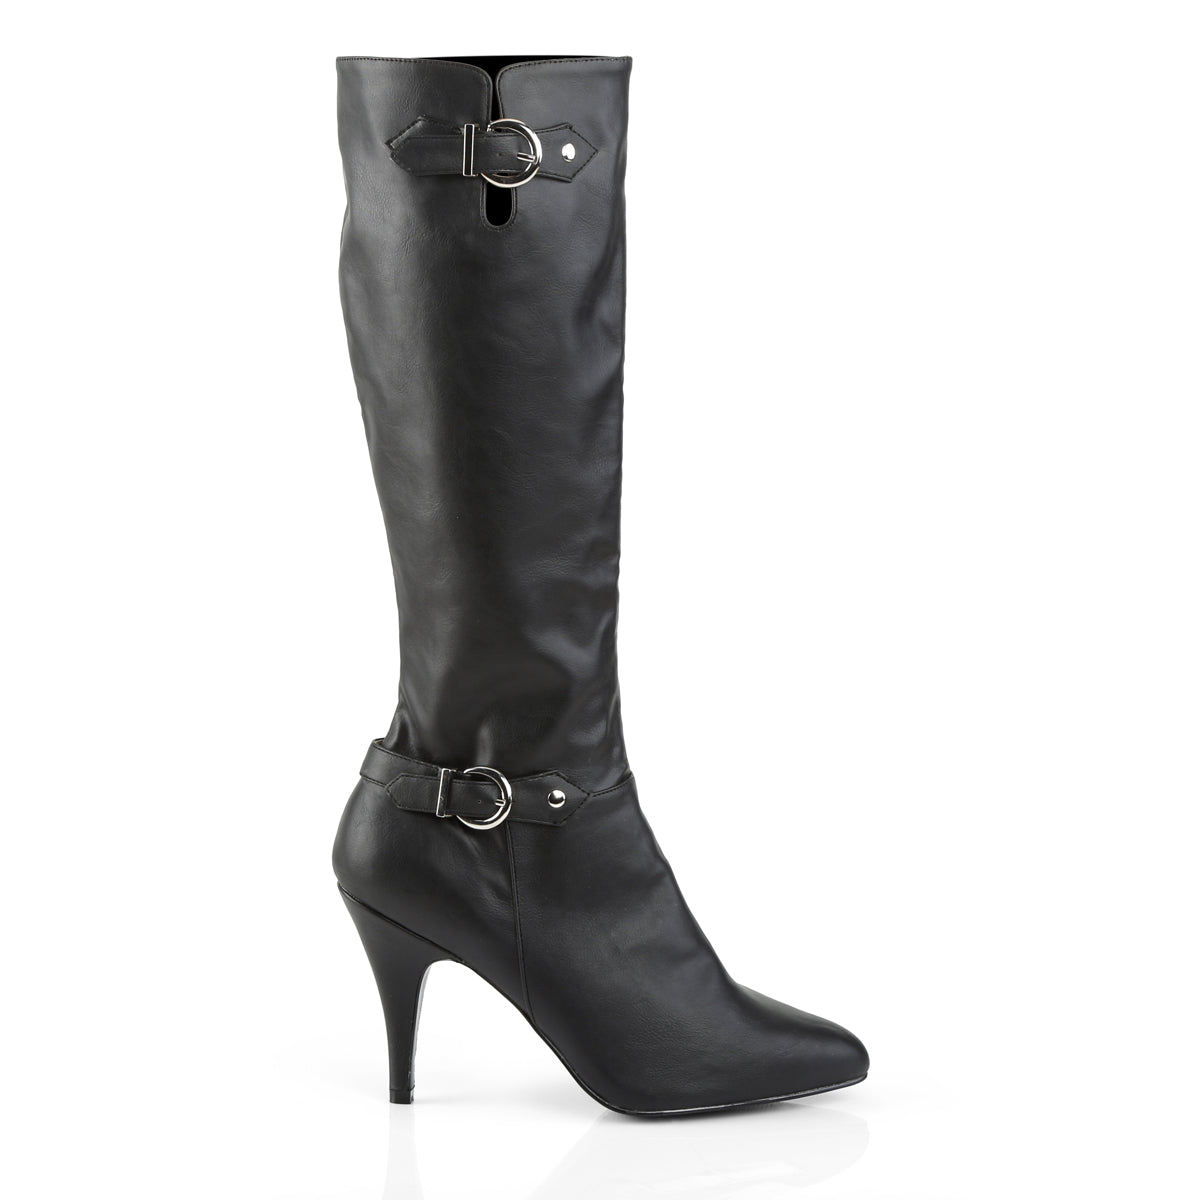 Women high heel boots black leather XXXXL wide leg